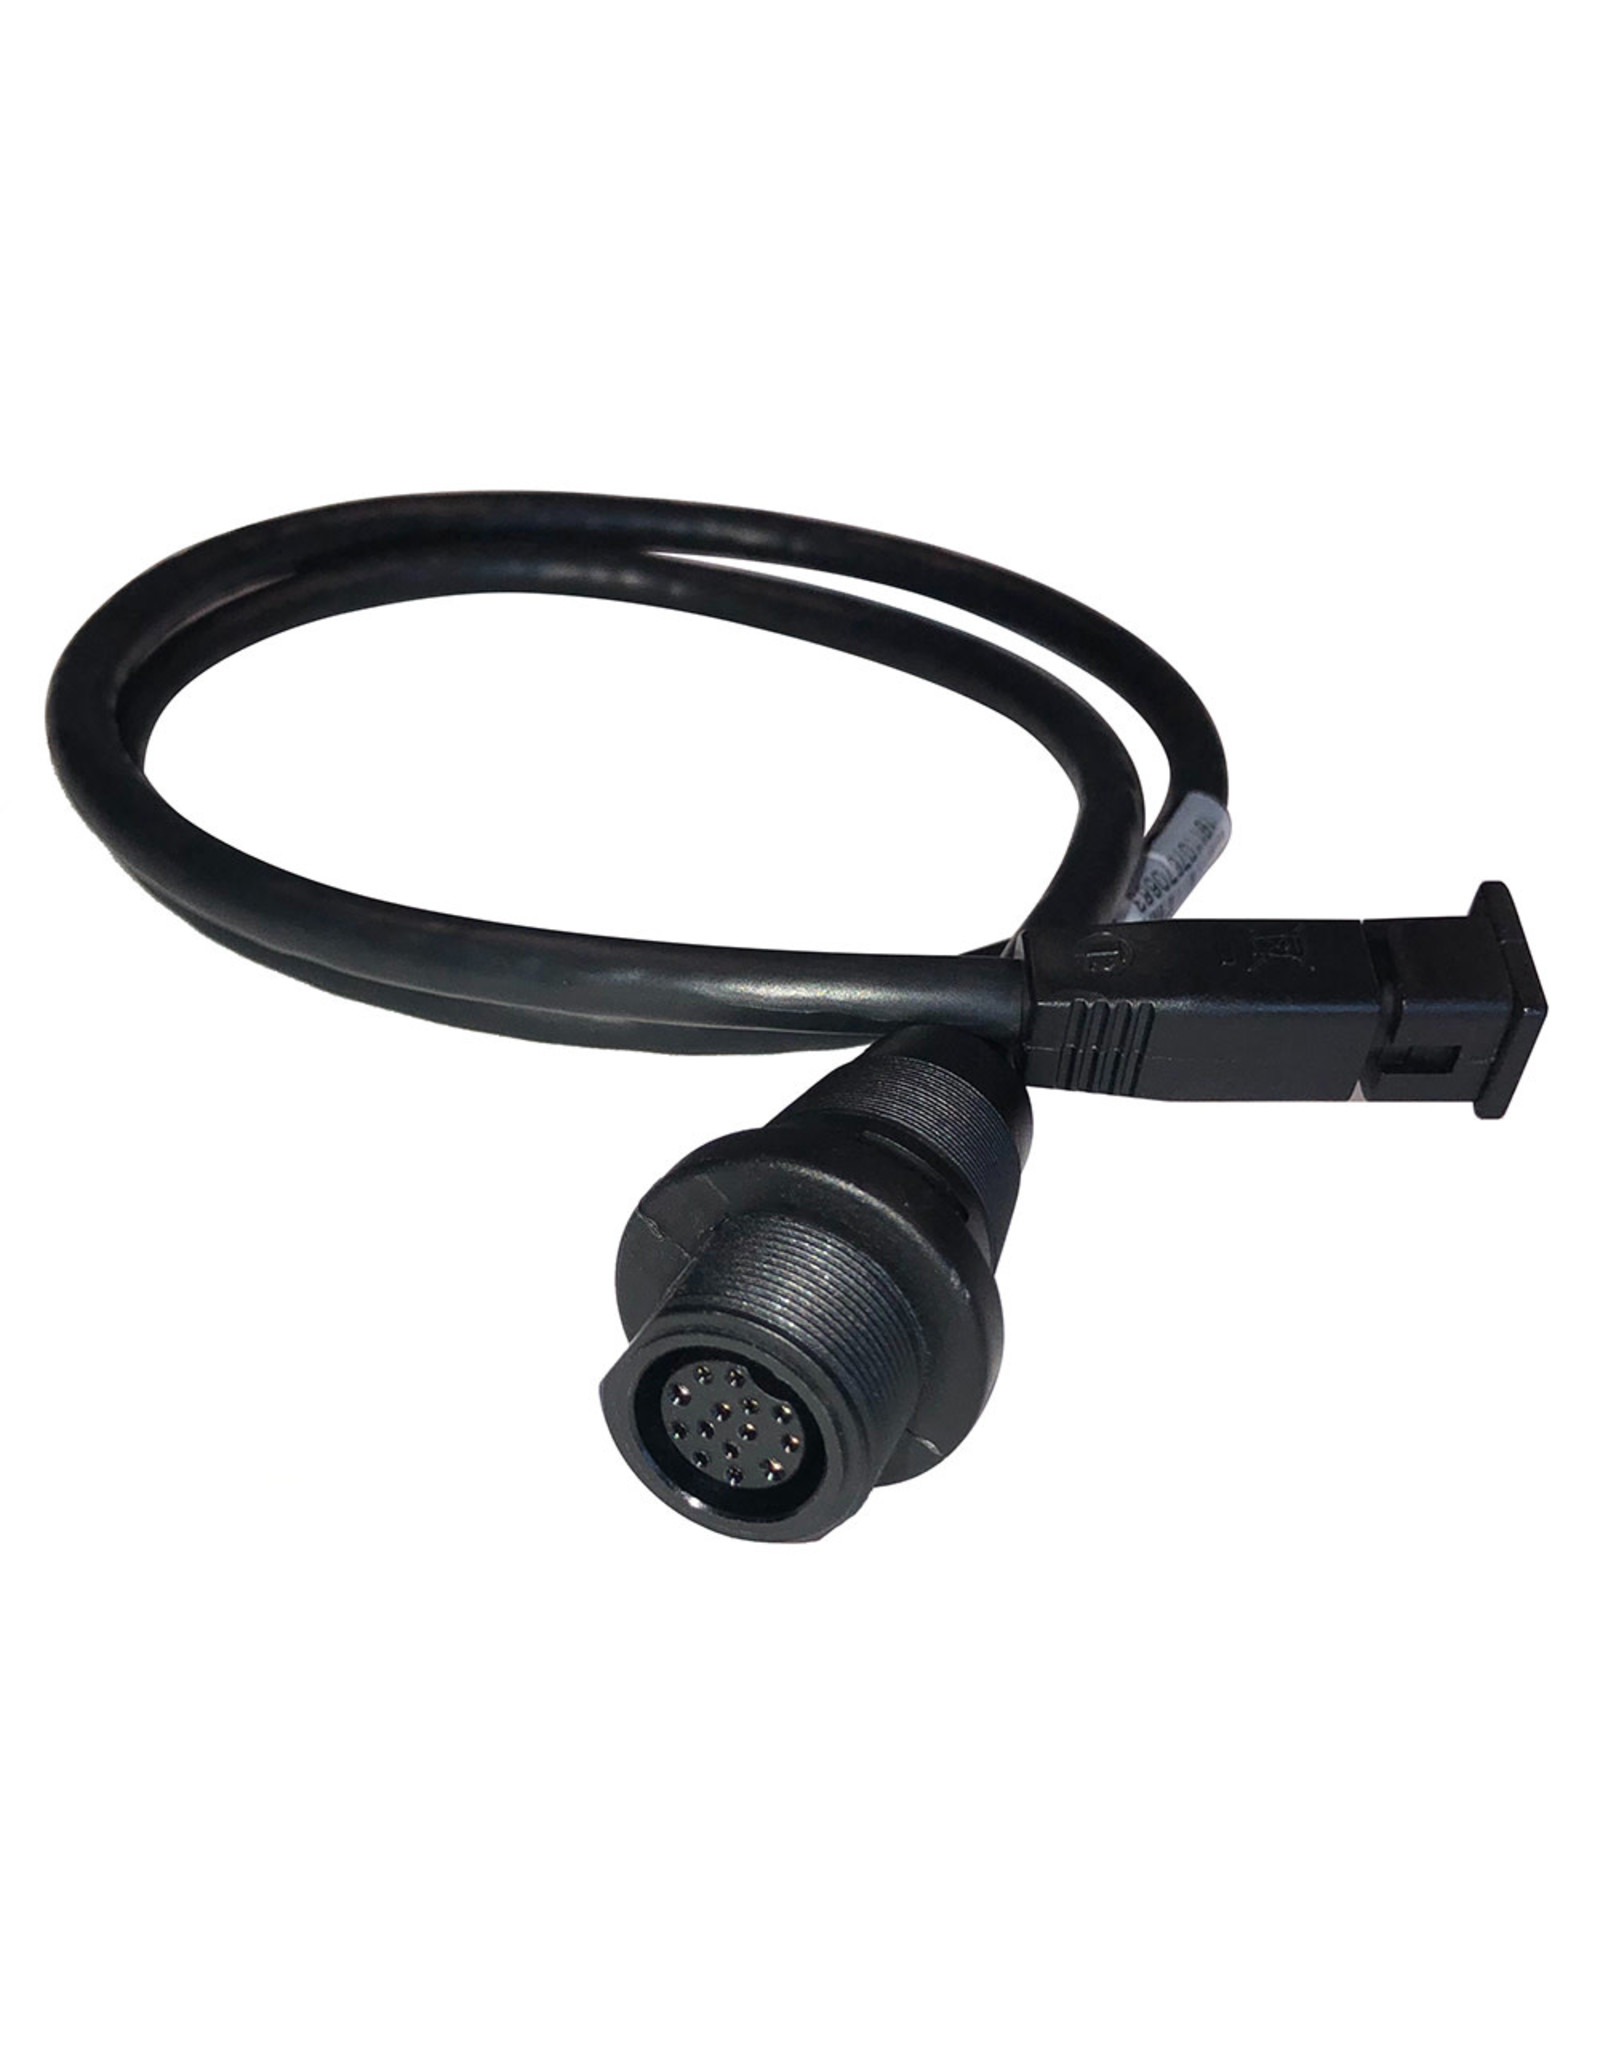 Minn Kota MKR-MI-1 Adapter Cable for Helix 8,9,10 & 12 MSI Units